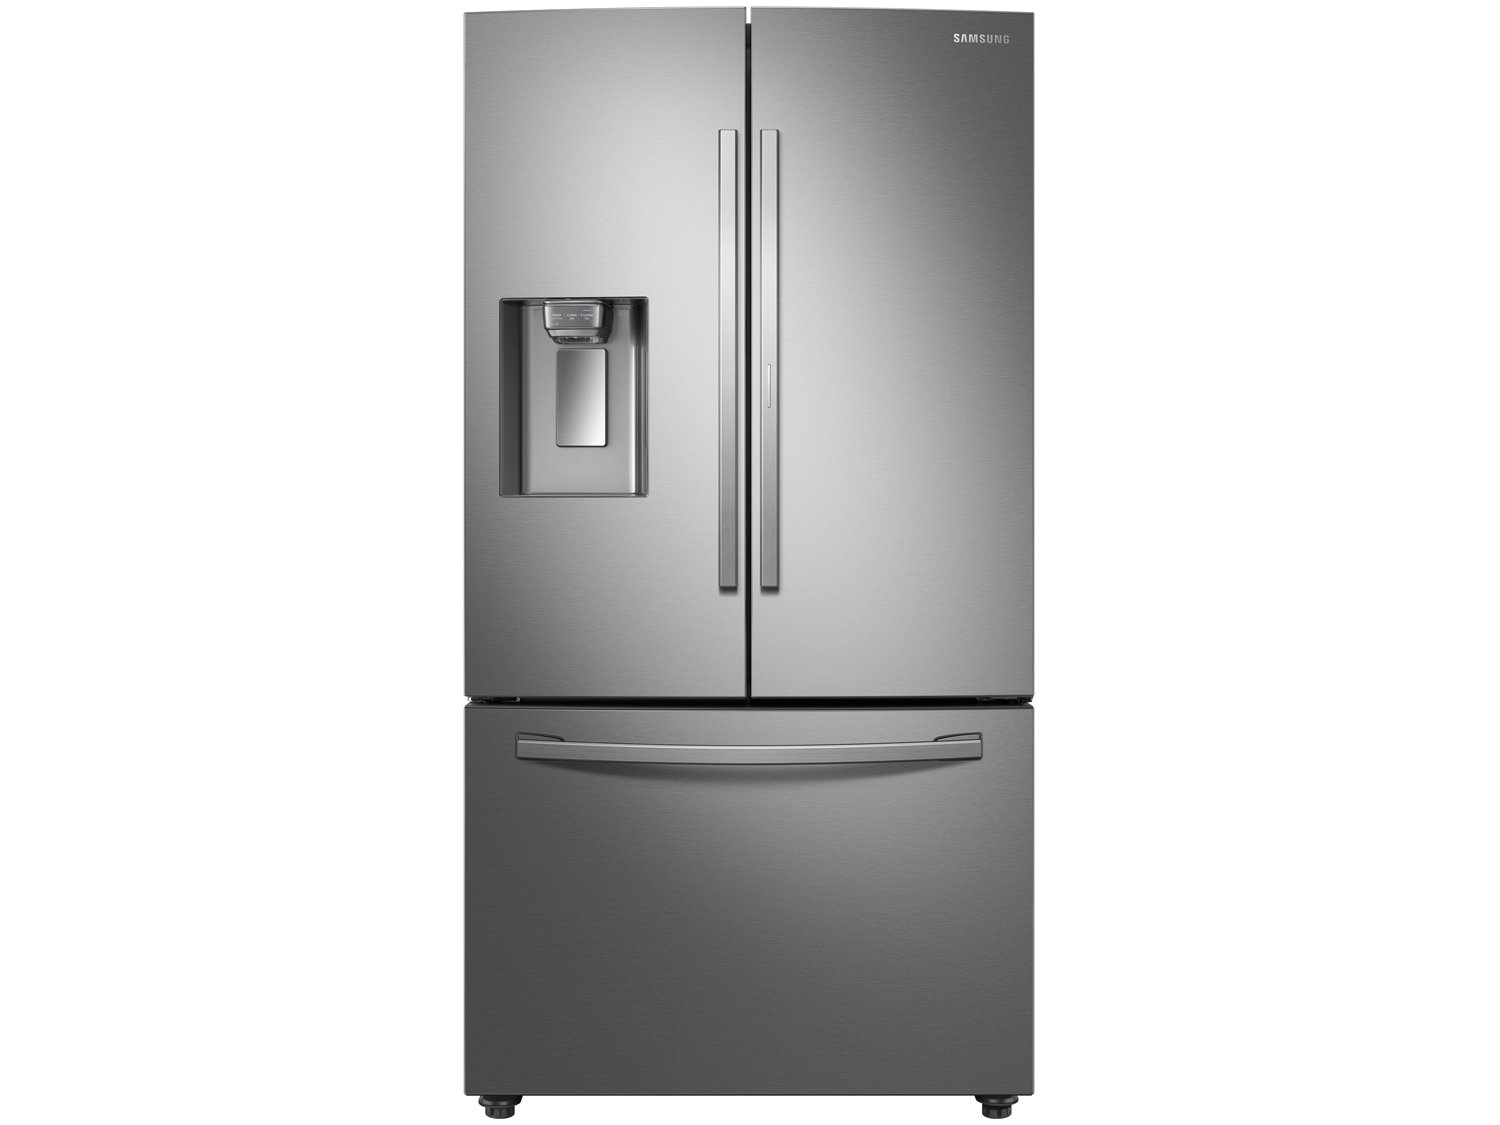 Refrigerador Samsung Inverter French Door RF23R6301SR/AZ com Twin Cooling Plus e SmartThings (Wi-Fi) Inox - 530L - 220v